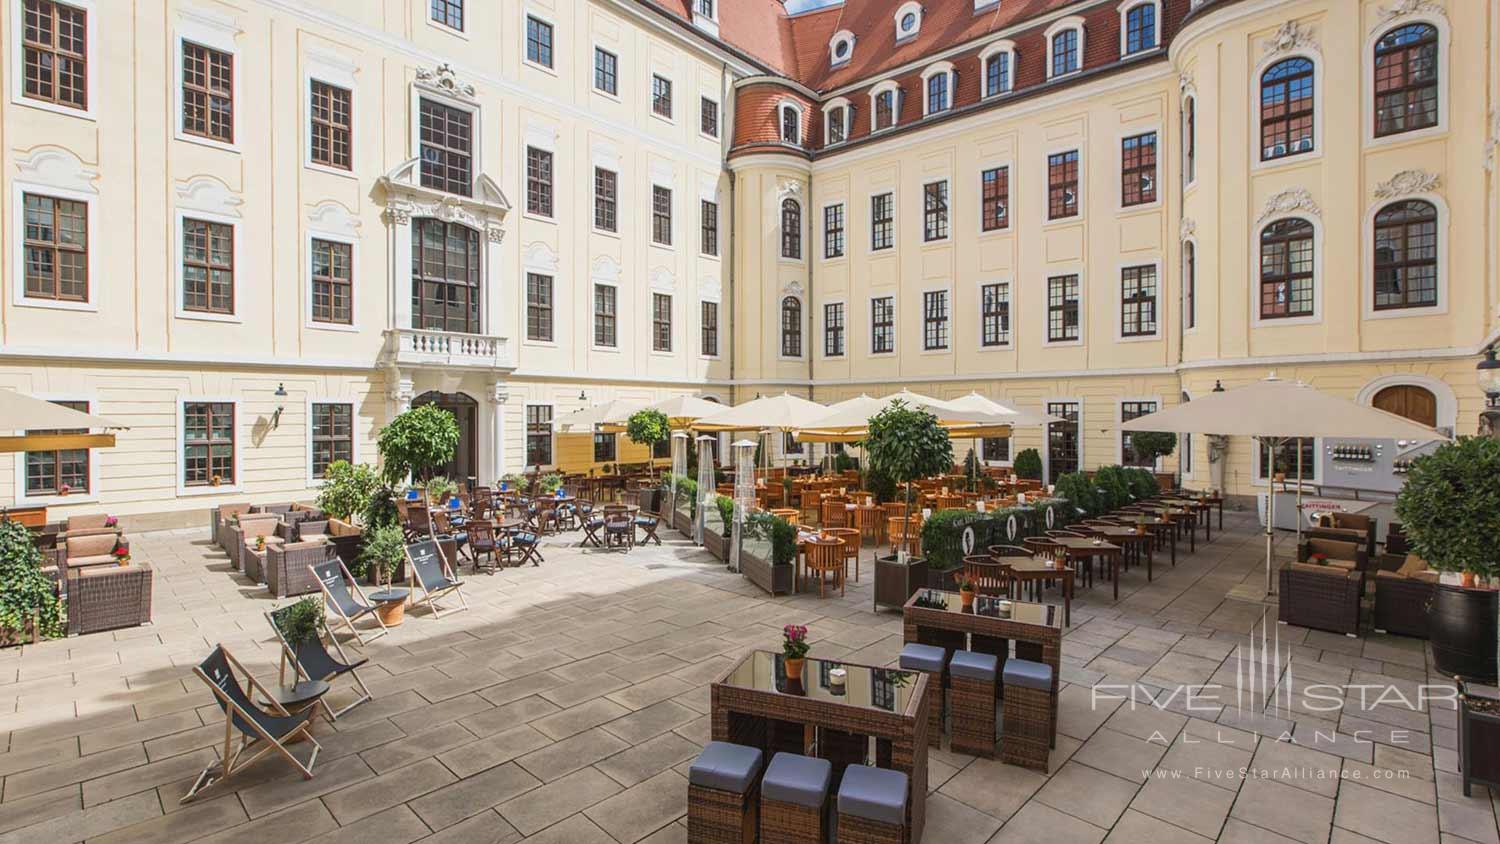 Courtyard at Hotel Taschenbergpalais Kempinski Dresden, Germany